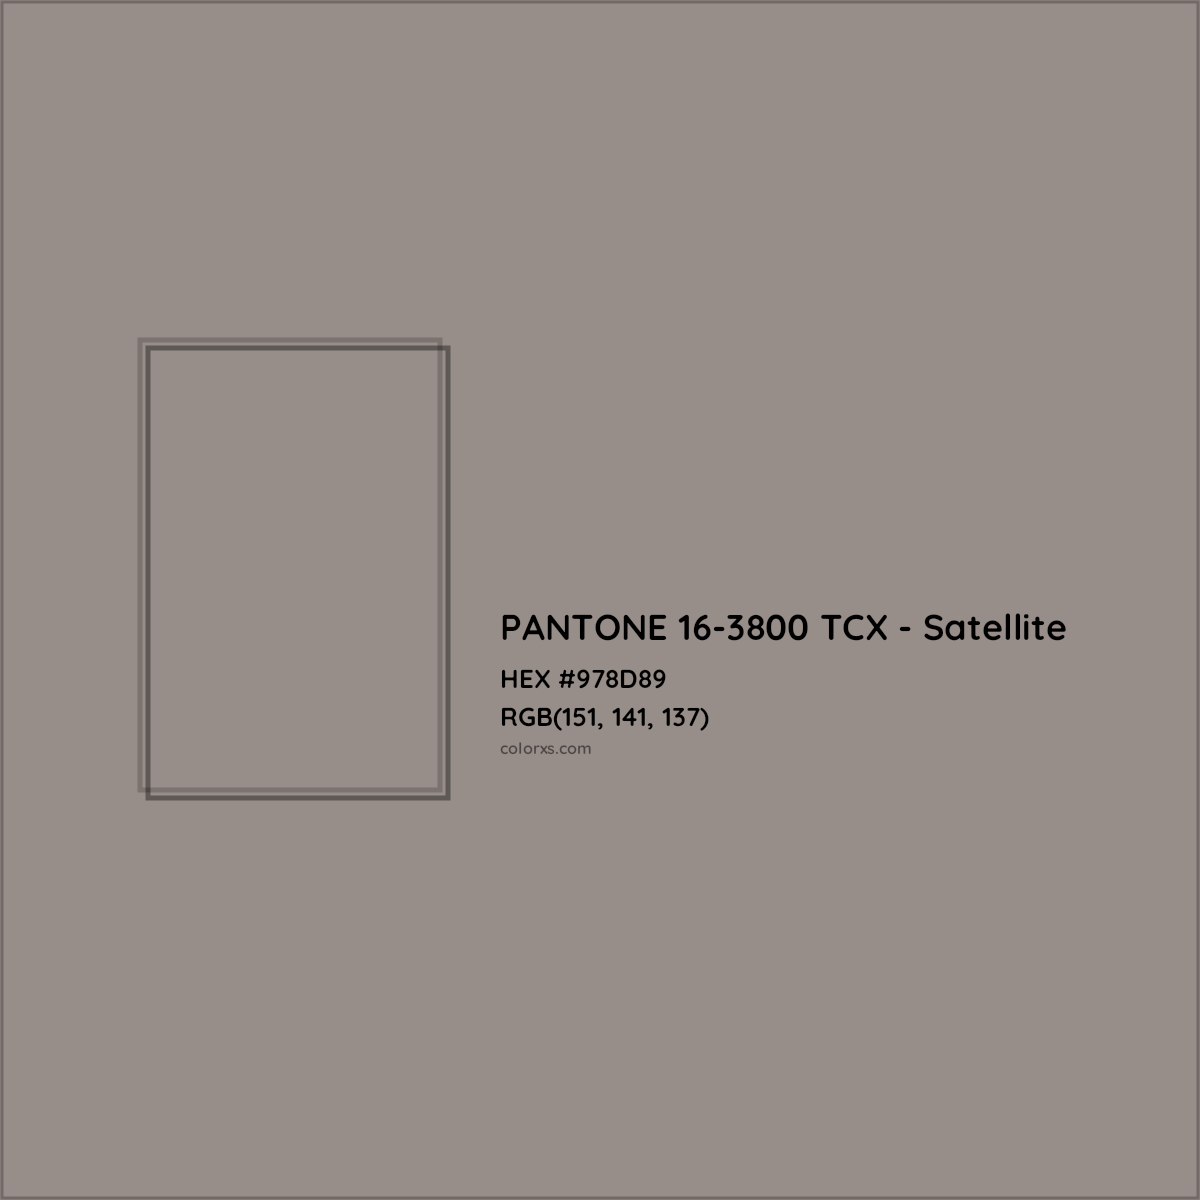 HEX #978D89 PANTONE 16-3800 TCX - Satellite CMS Pantone TCX - Color Code